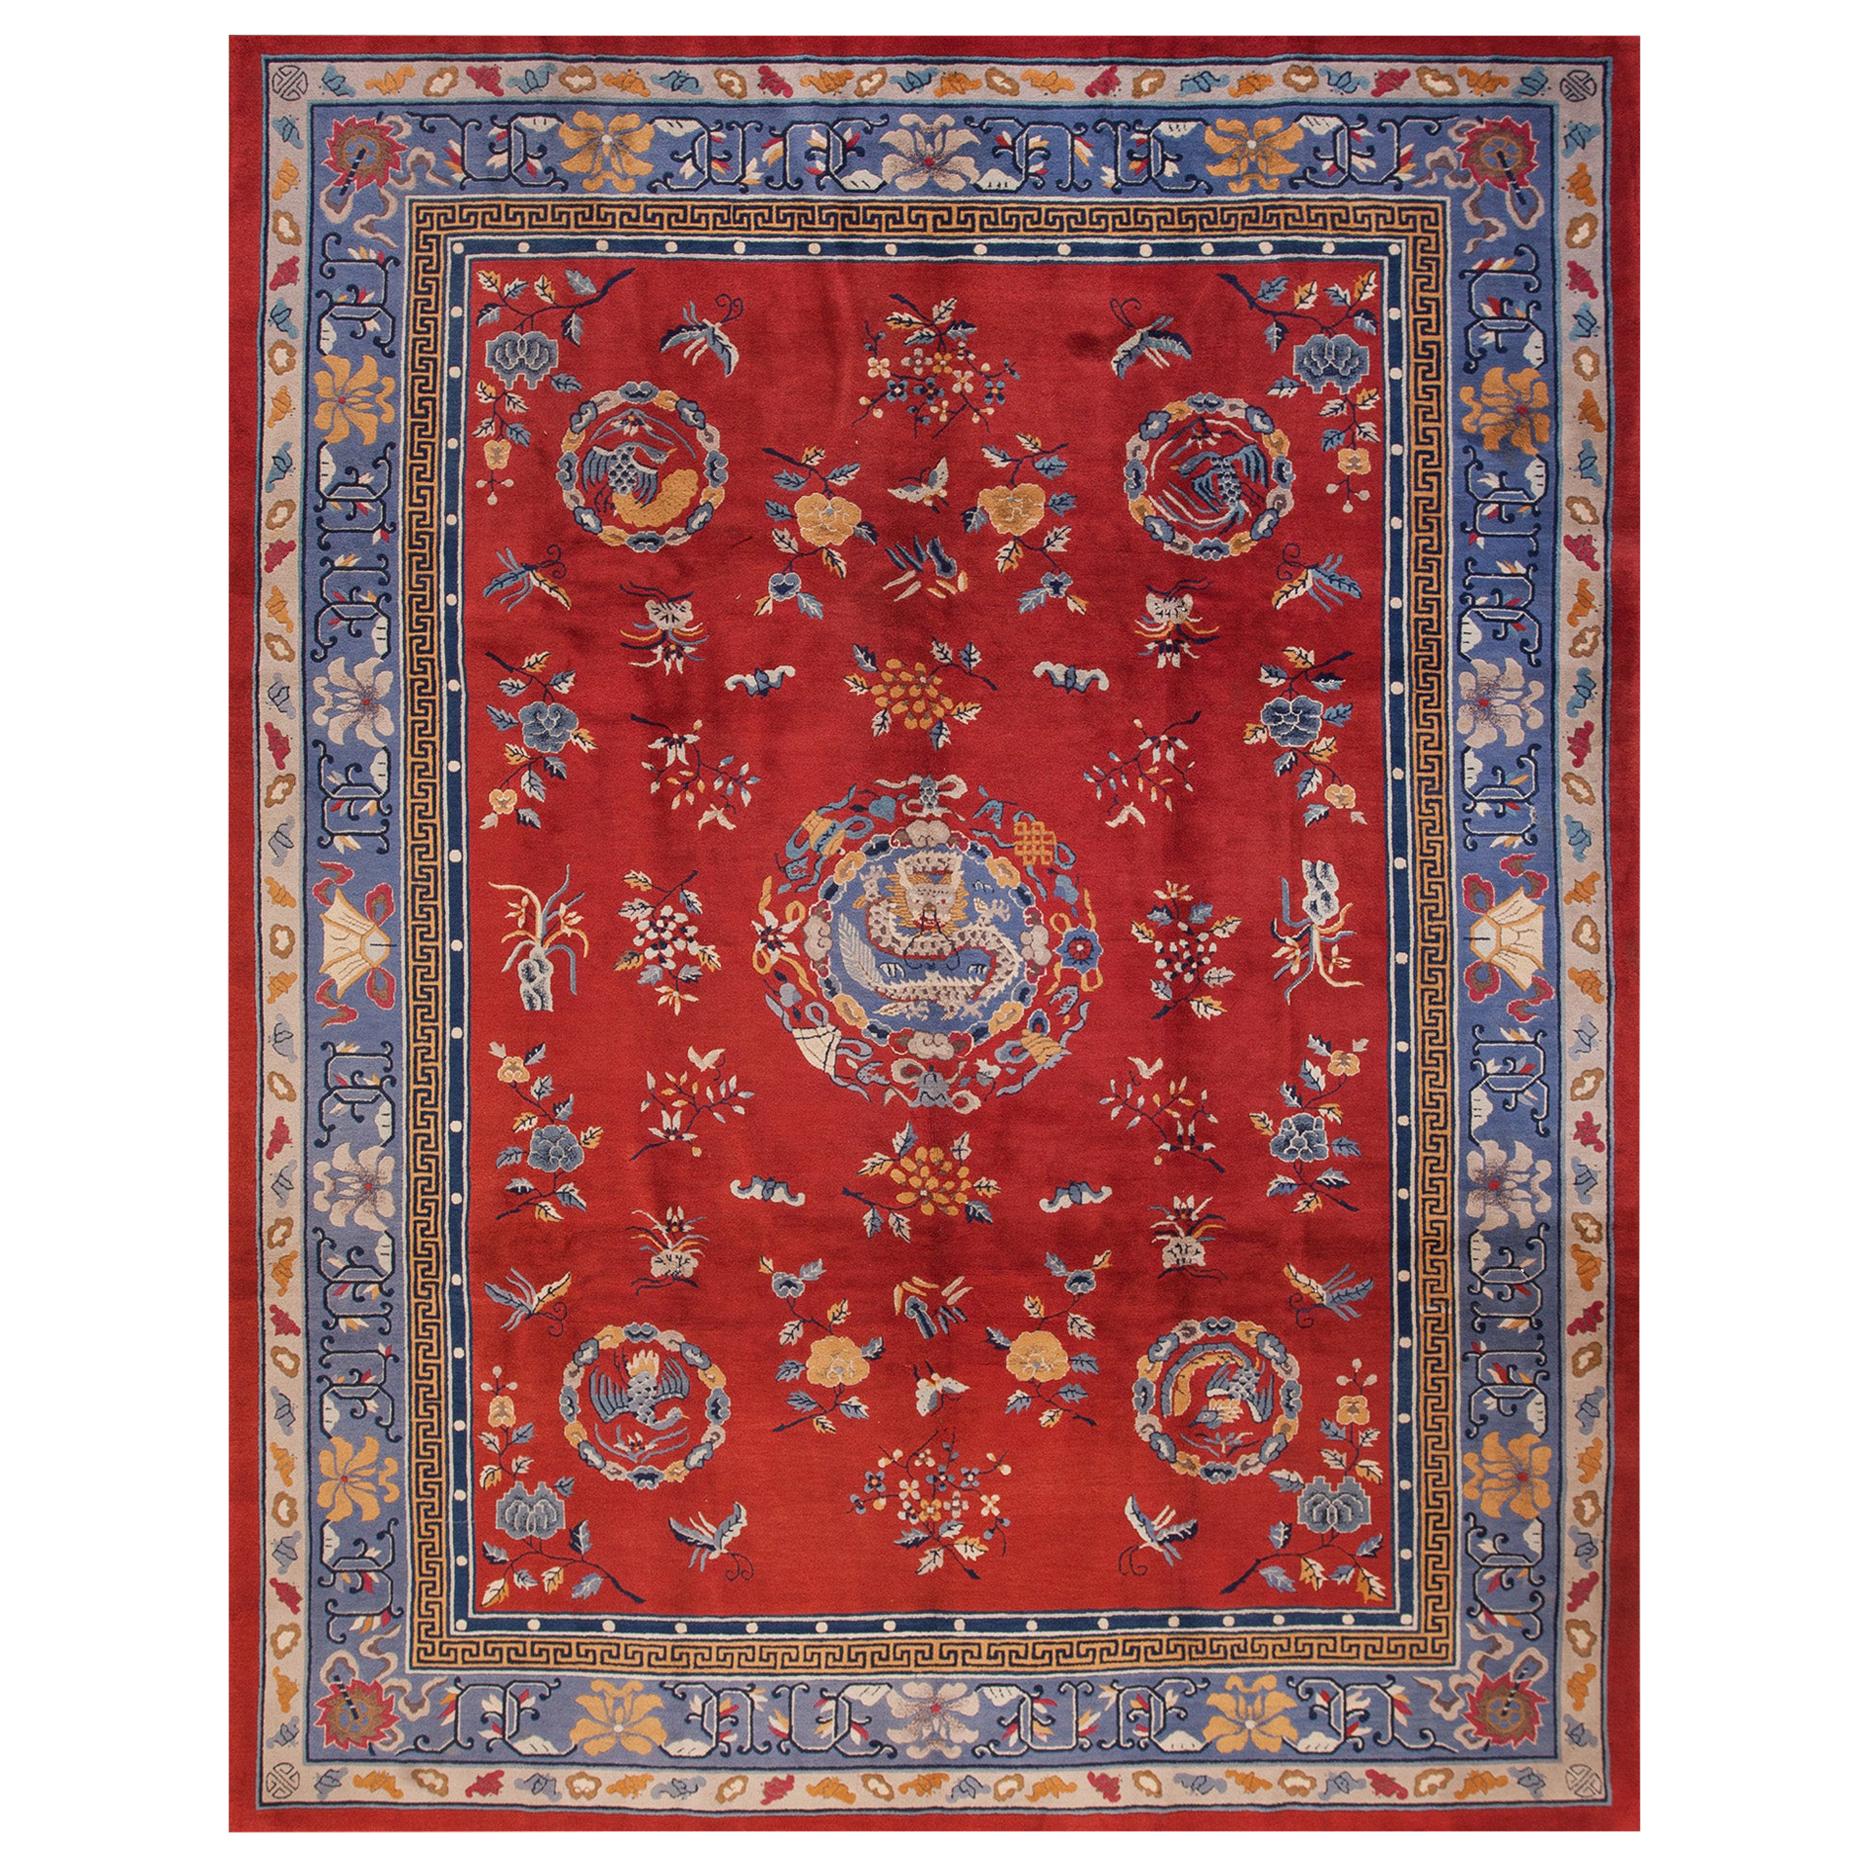 Early 20th Century Chinese Peking Carpet ( 9'2" x 11'8" - 280 x355 )